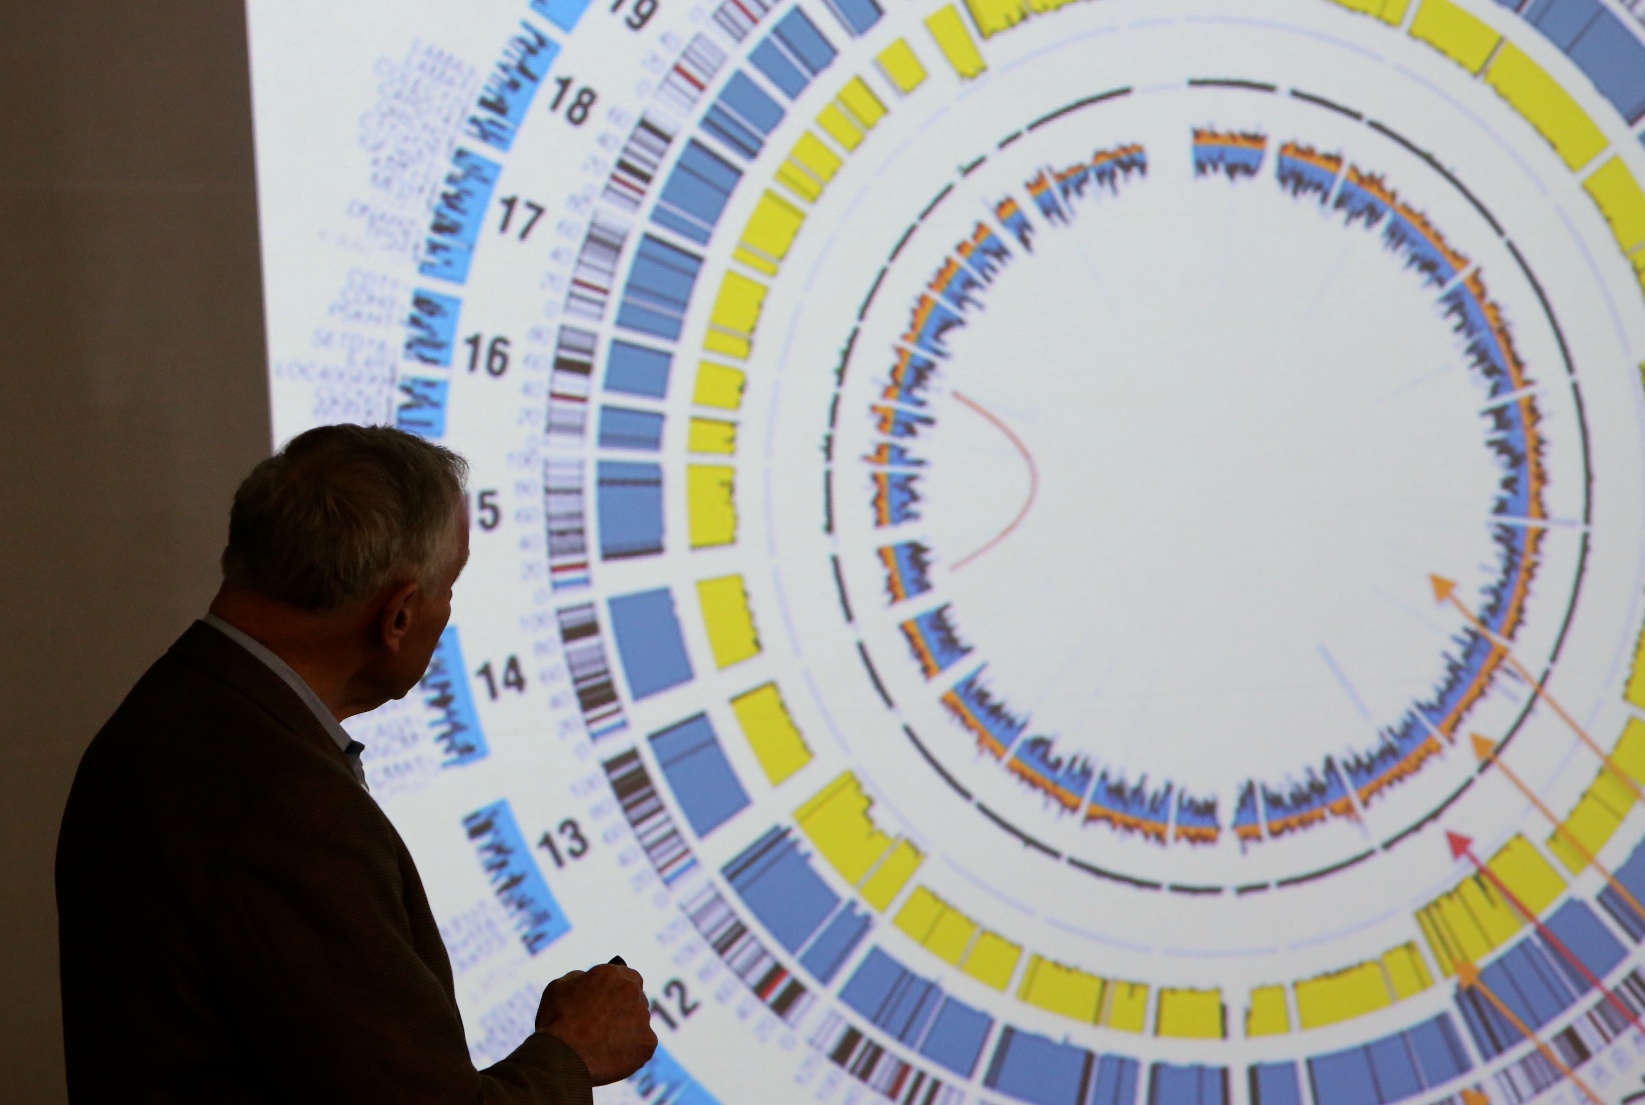 Cancer genomics visualization at ISB